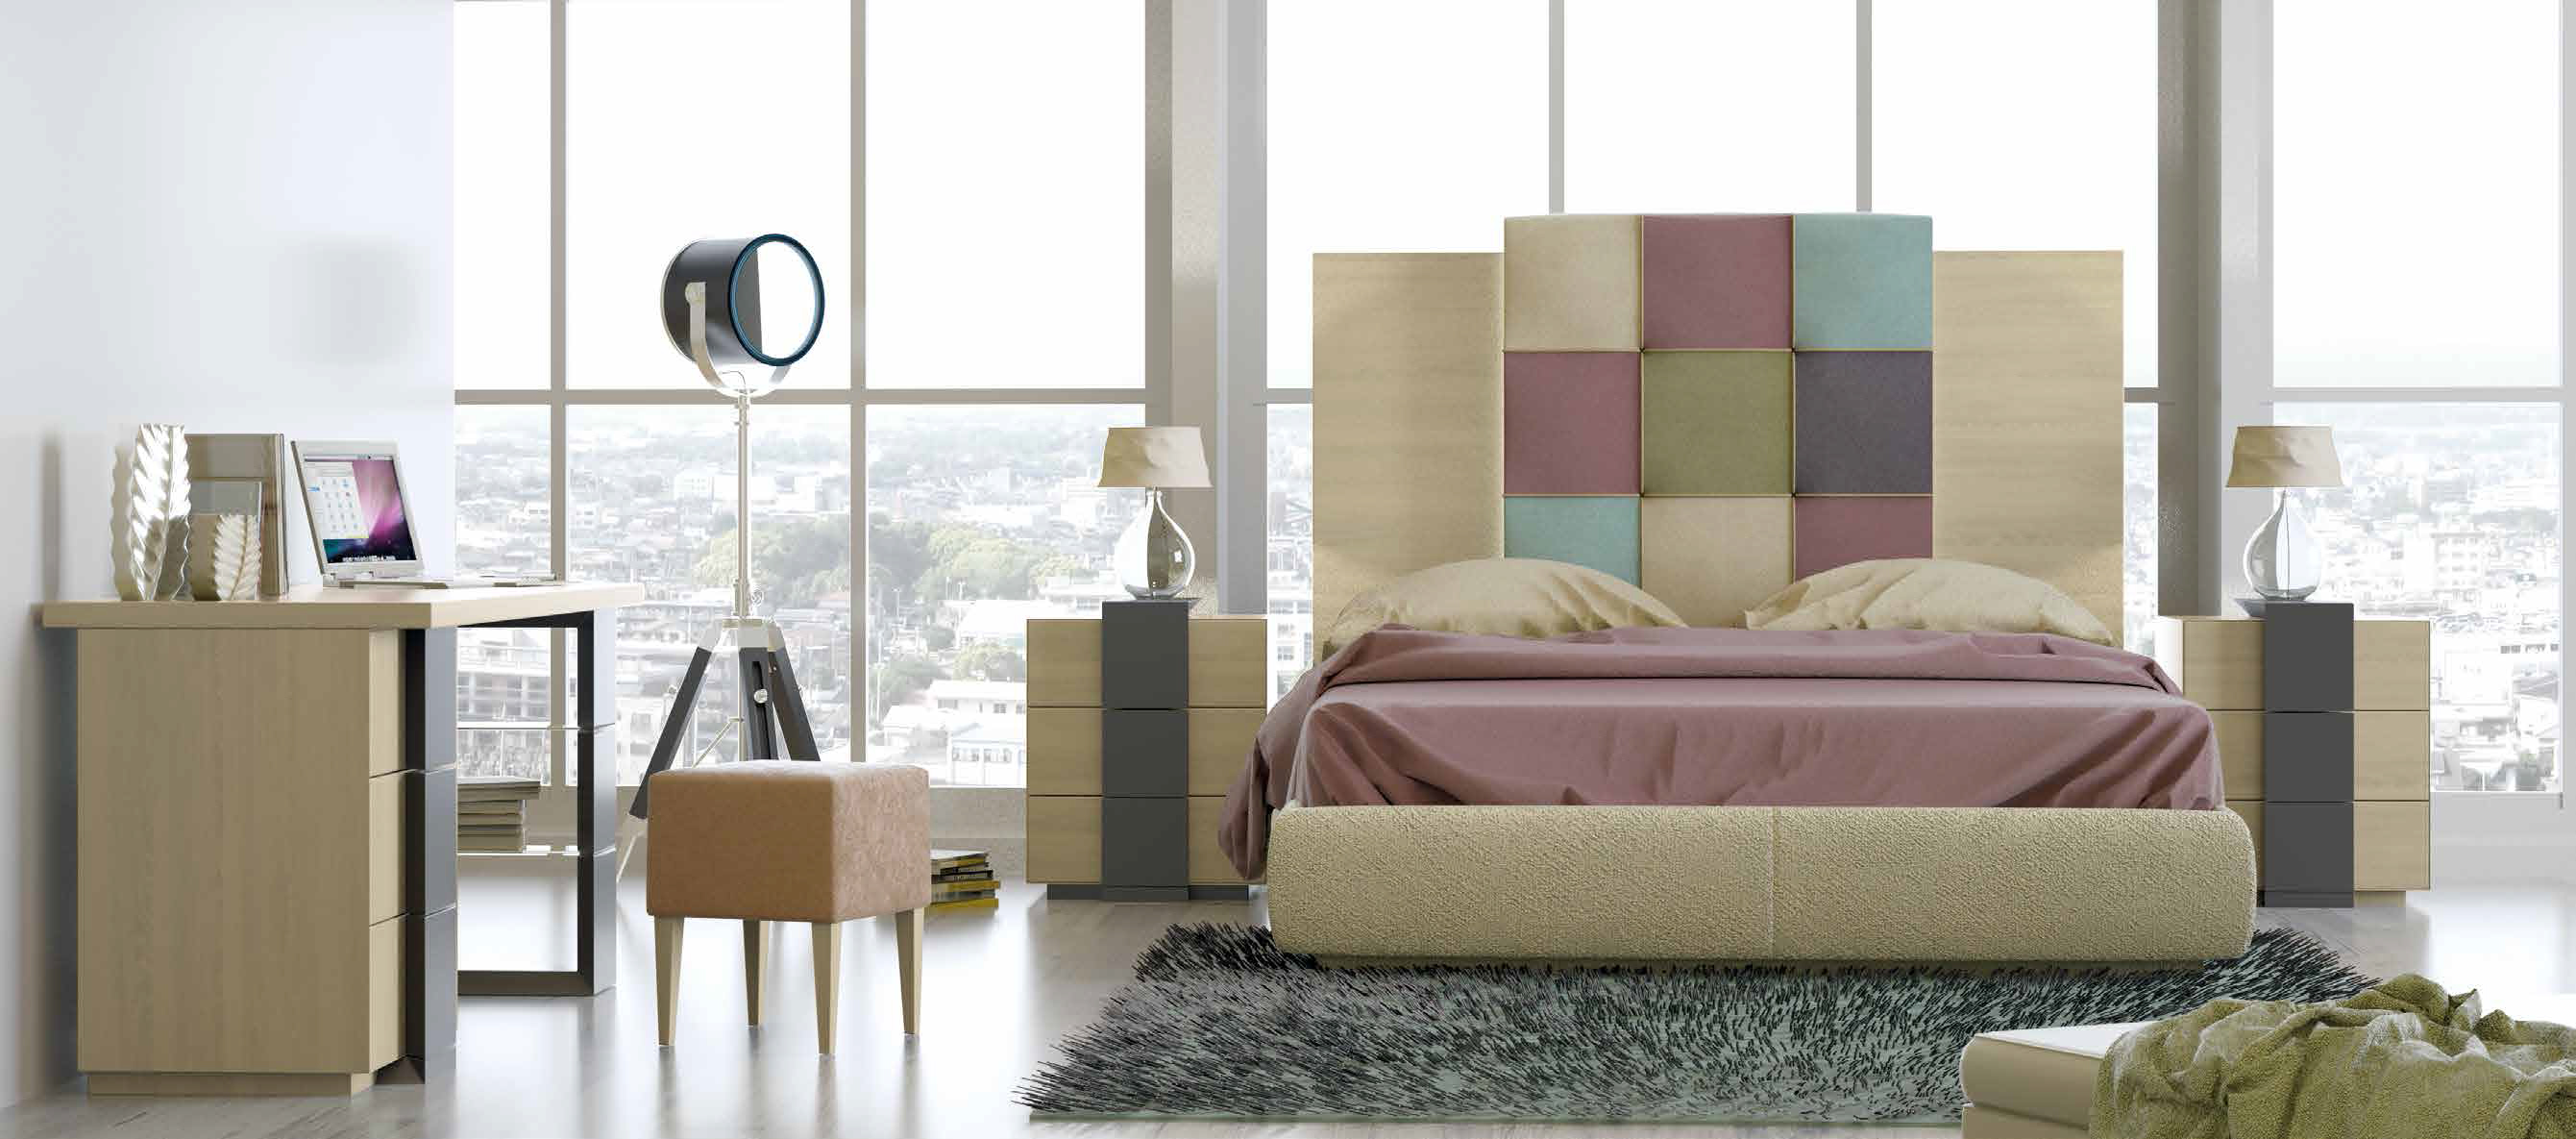 Brands Garcia Sabate, Modern Bedroom Spain DOR 12